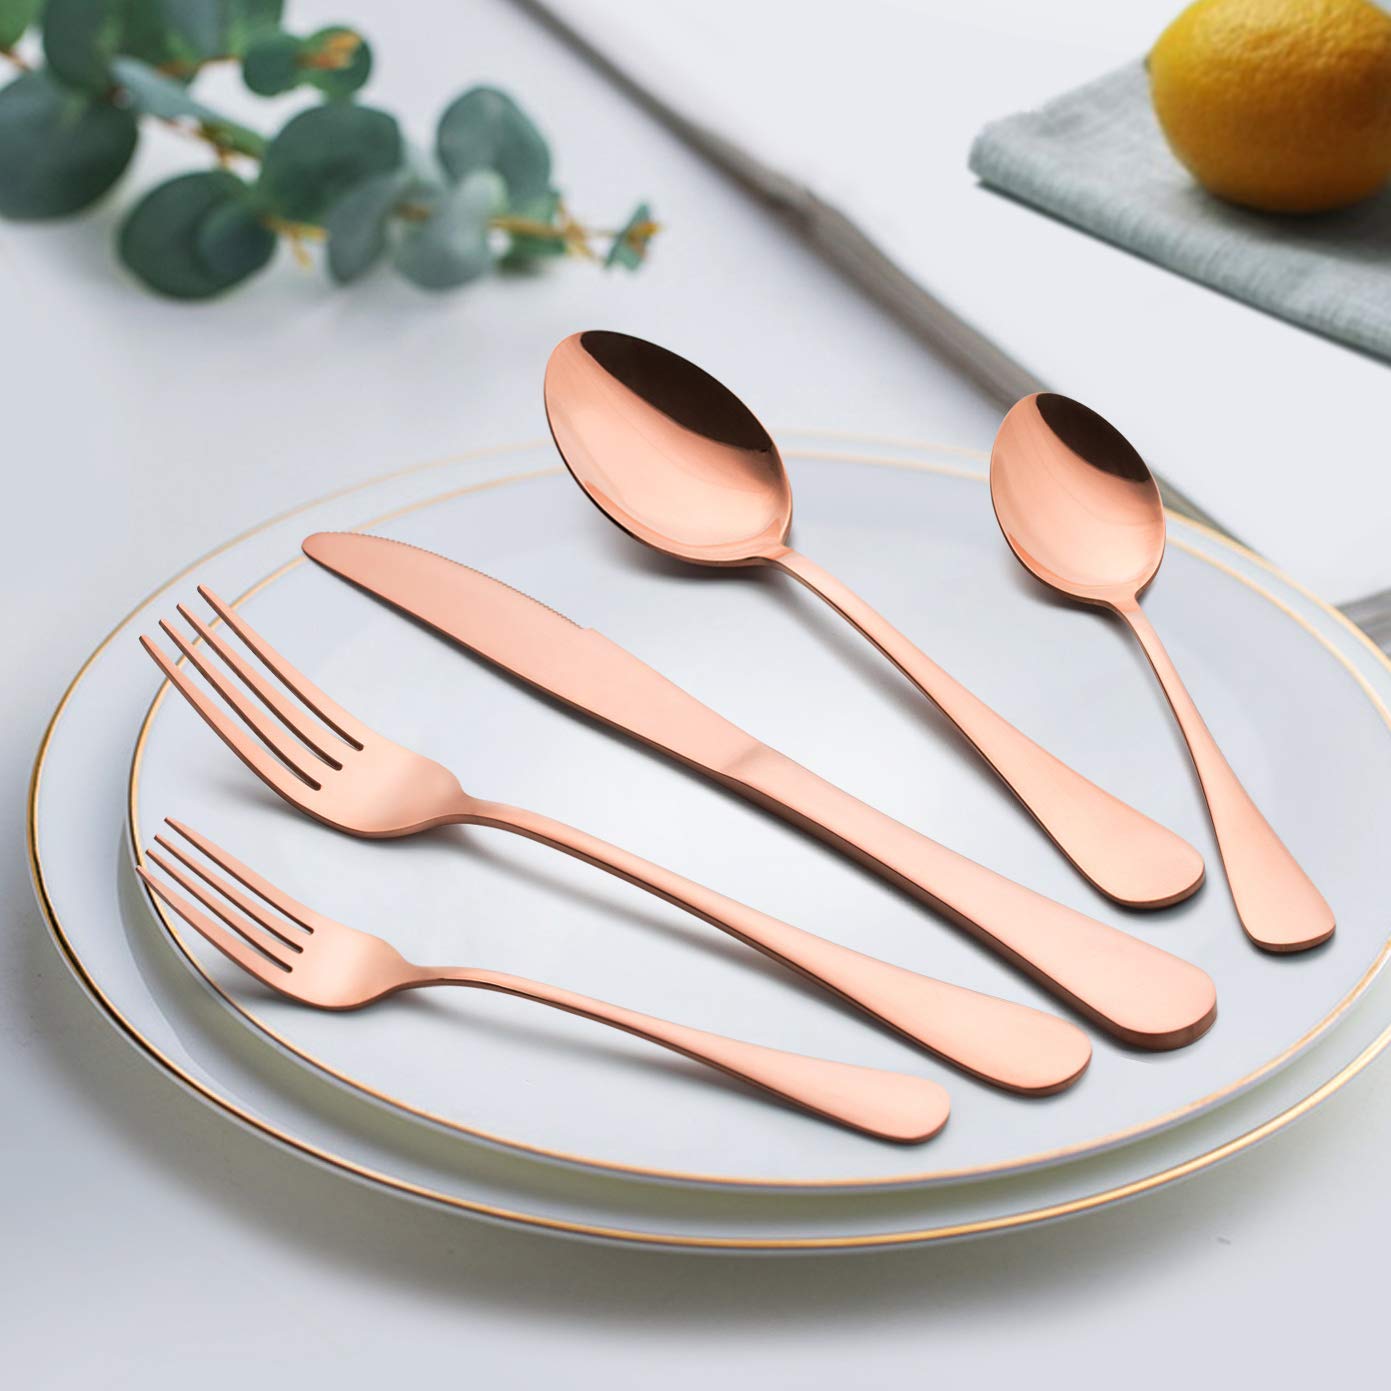 Hotel Dinnerware Mirror Cutlery European-Style Tableware Rose Gold Set of 28 - Star Work 